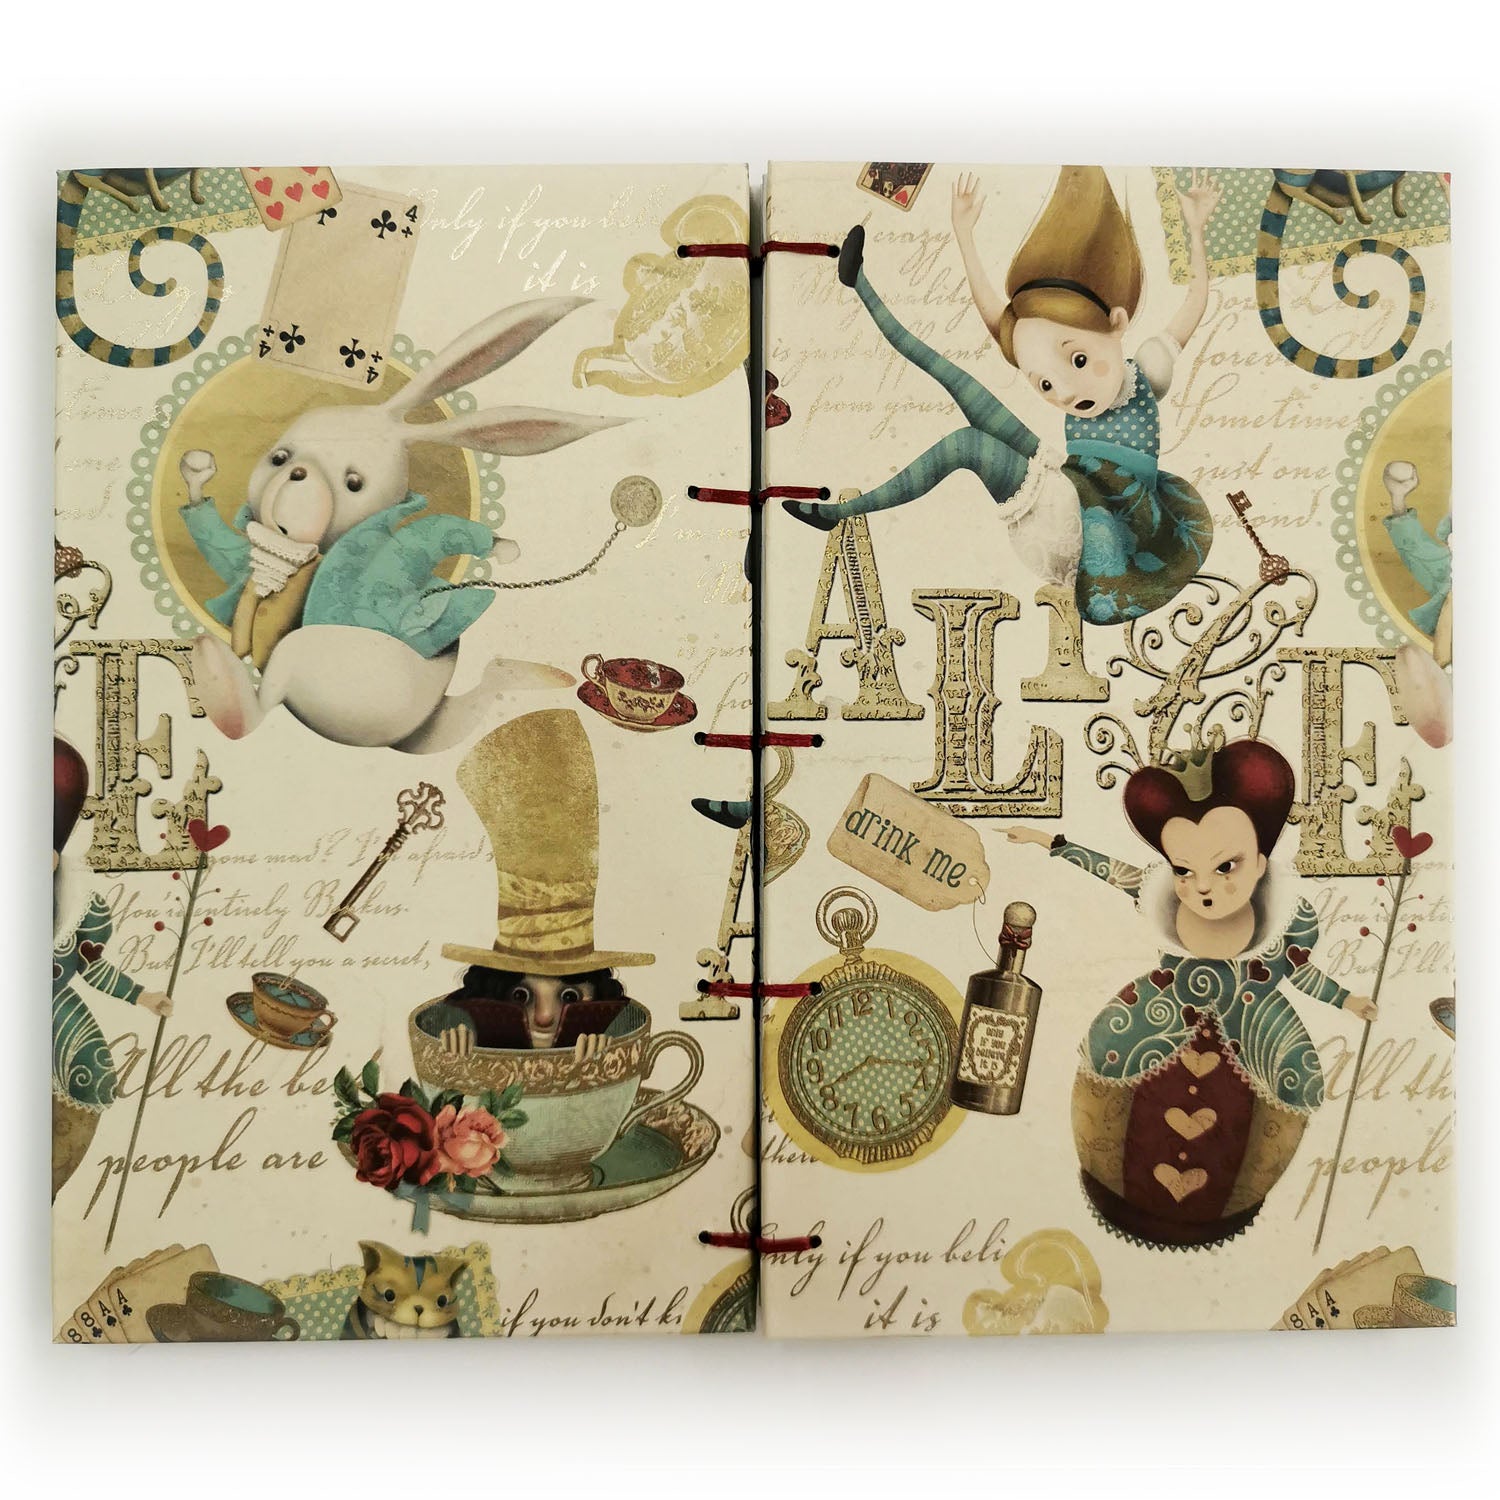 Handmade Notebook with Byzantine Binding - Alice in Wonderland